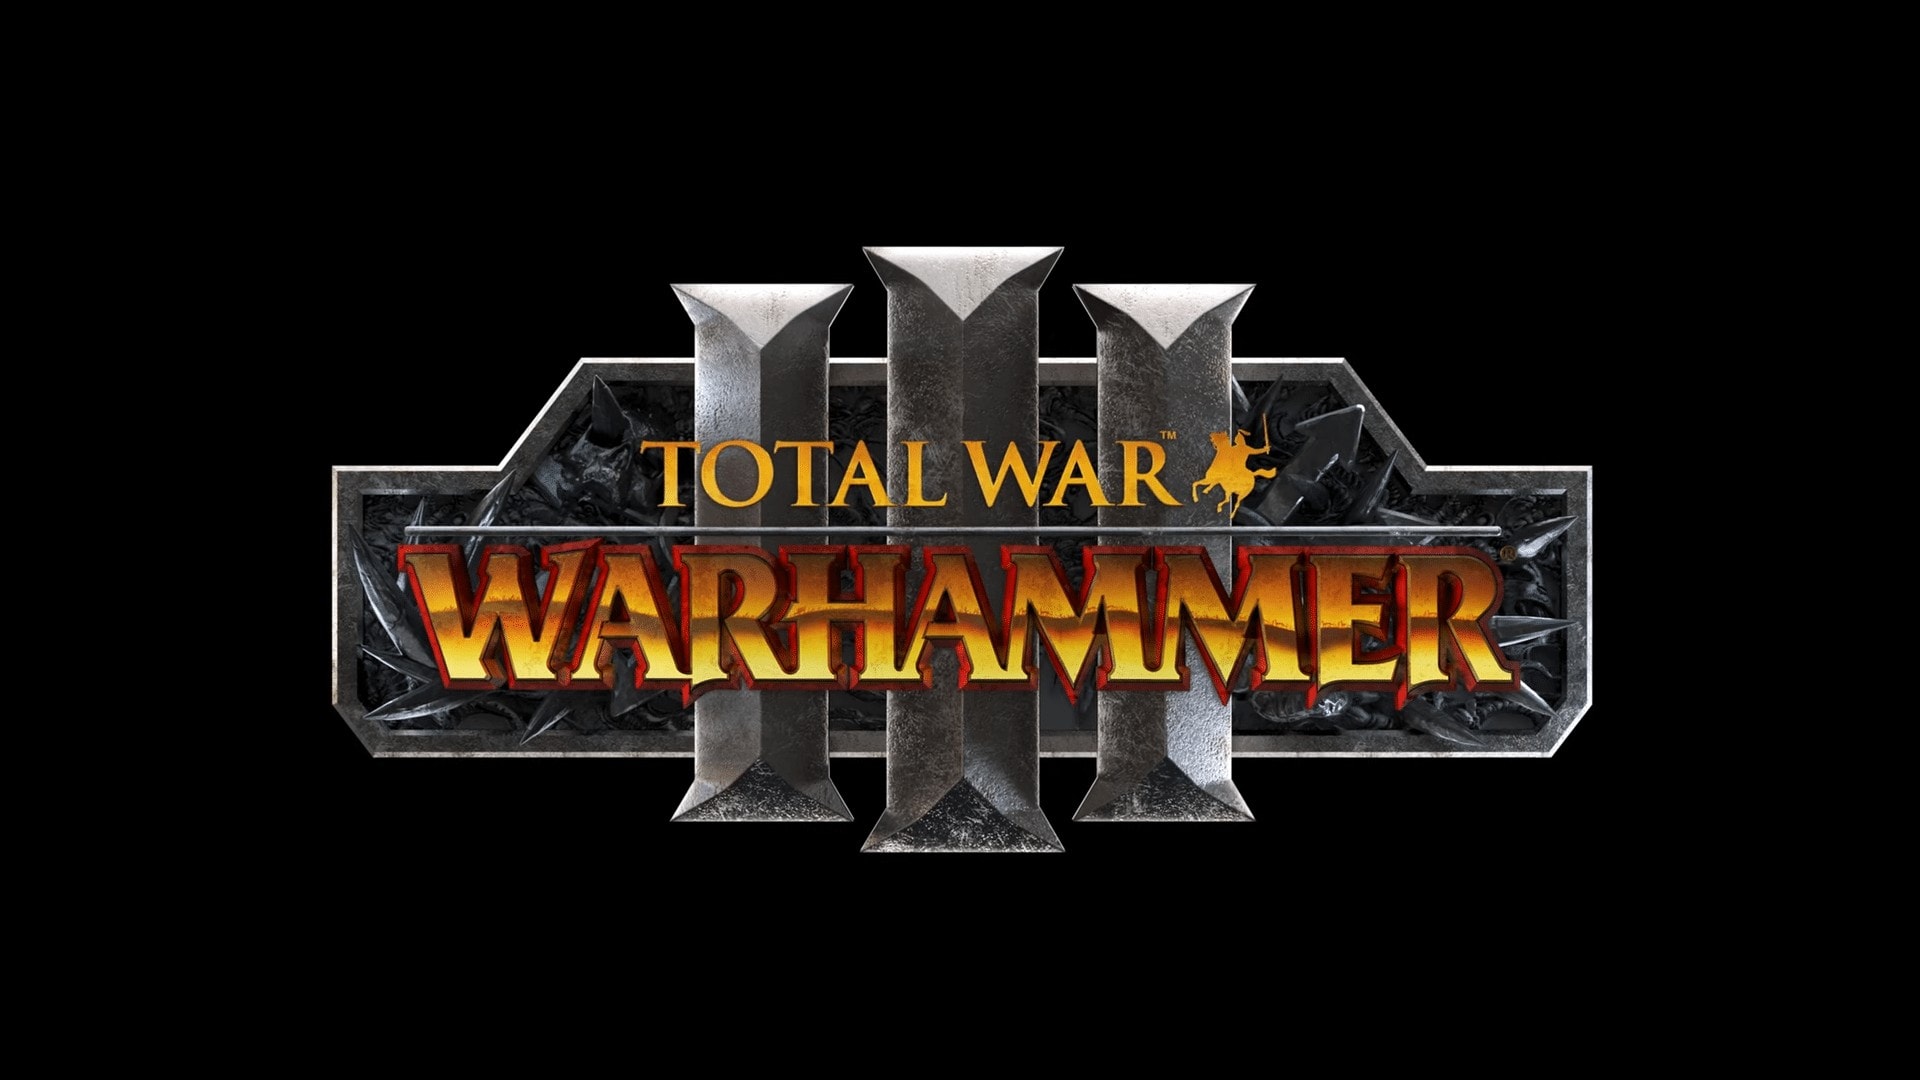 Warhammer 3 Announce